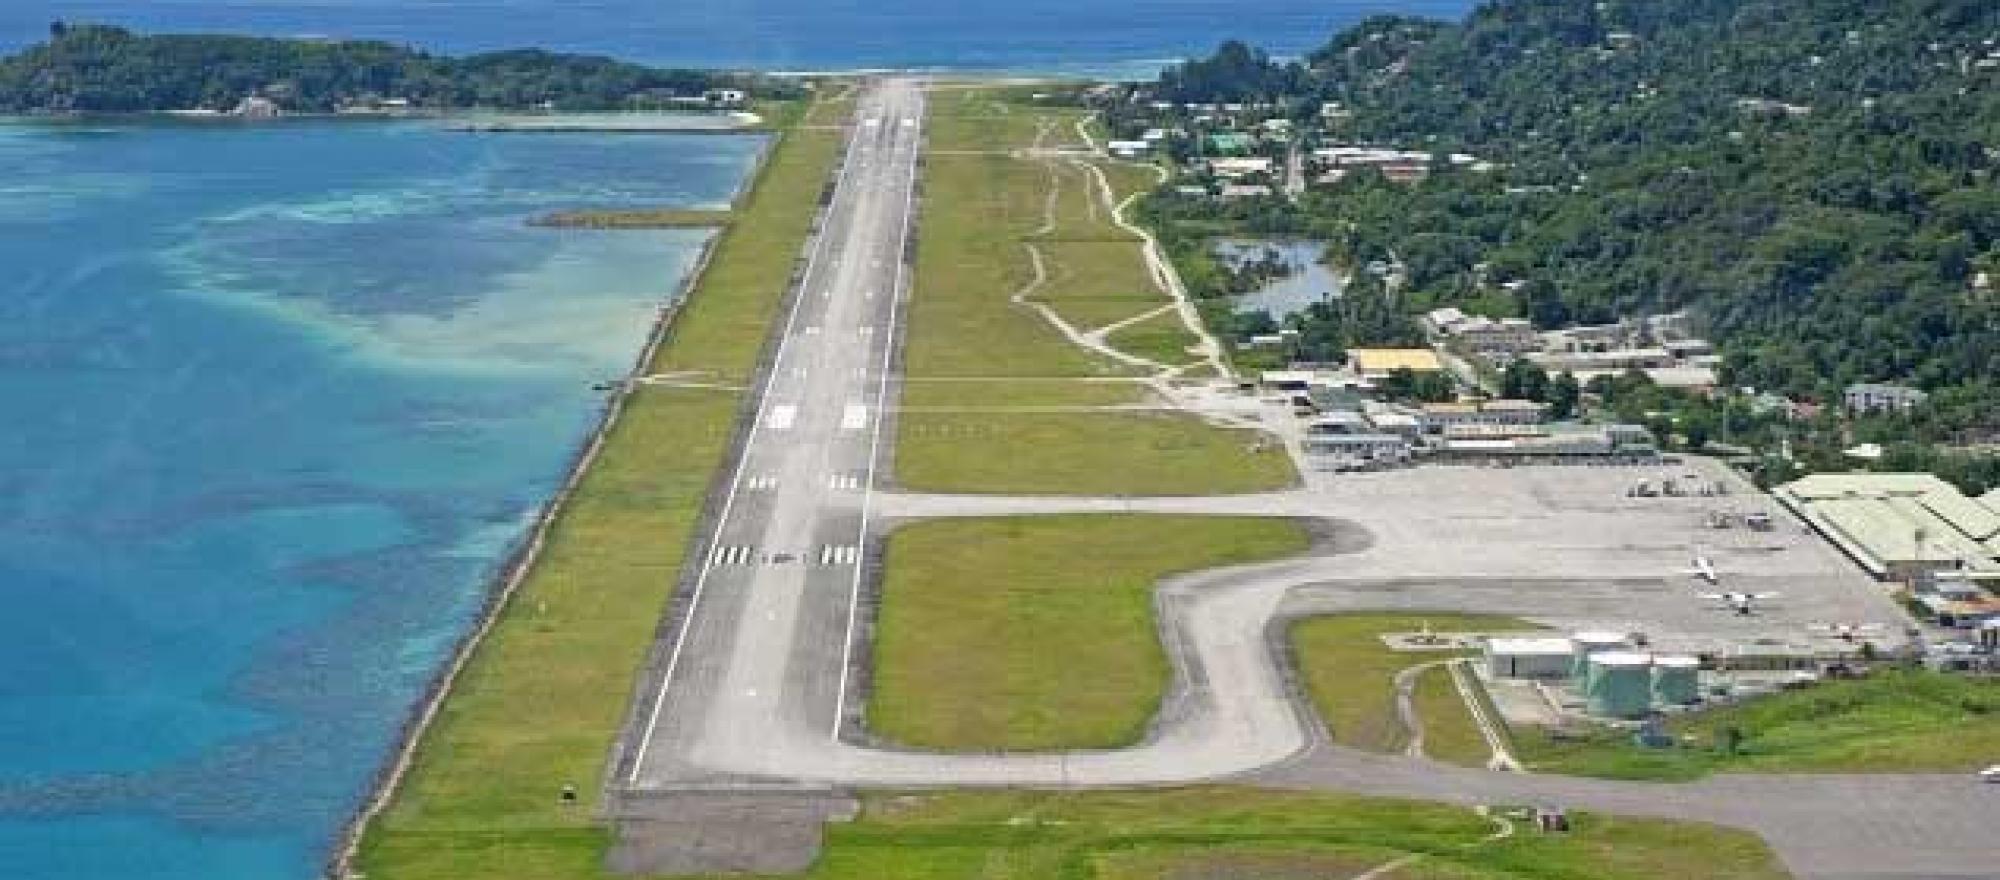 Seychelles International Airport on the island of Mahé